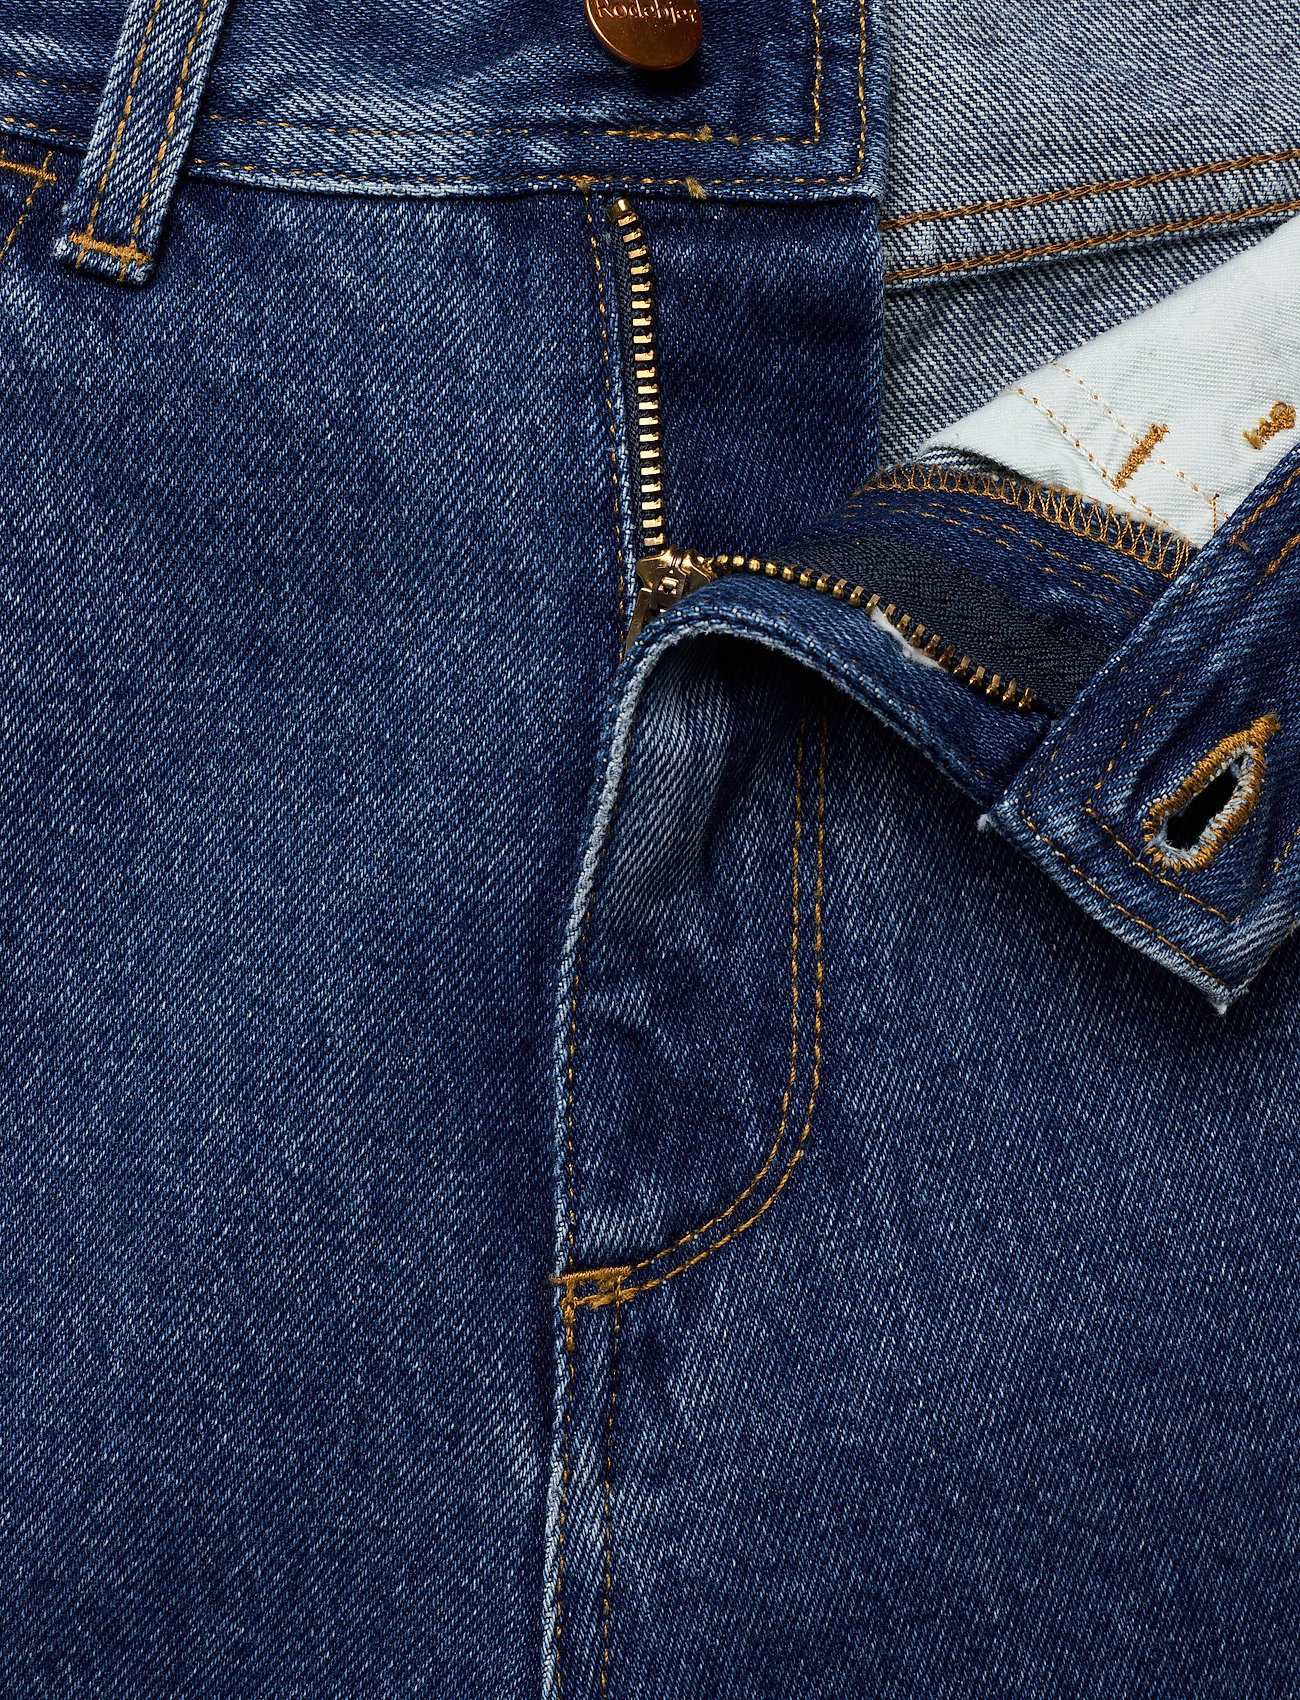 RODEBJER - RODEBJER HALL - flared jeans - vintage blue - 3